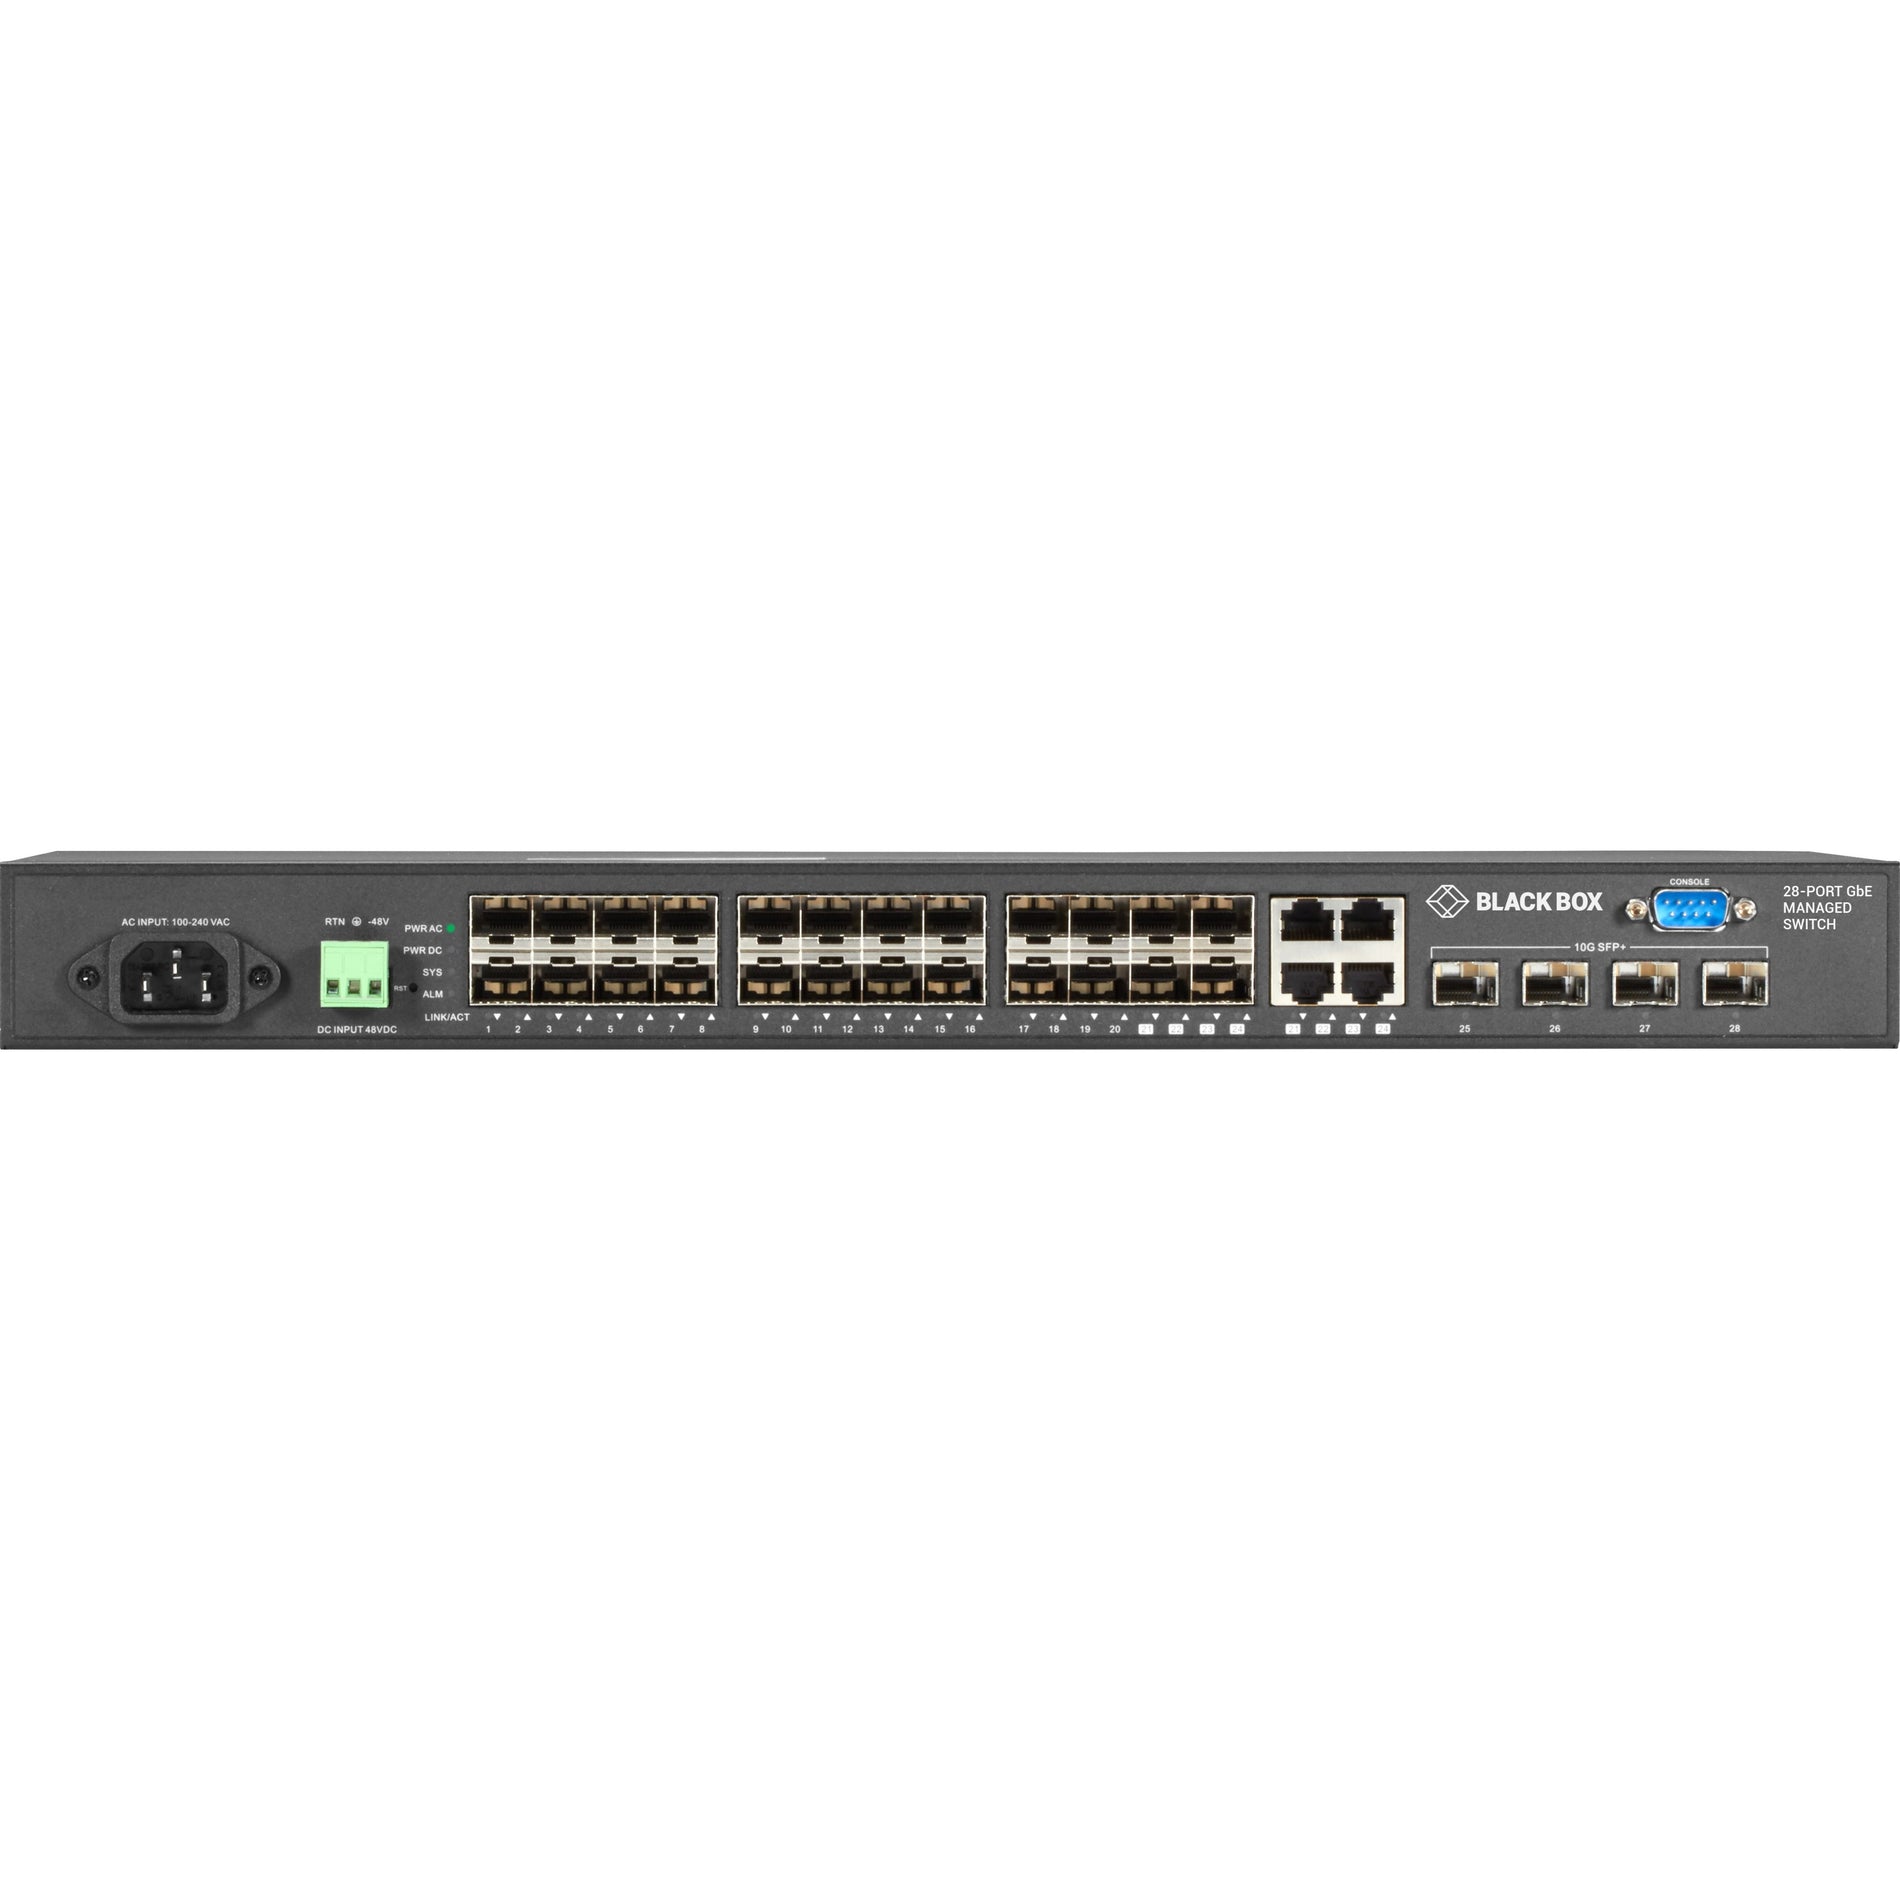 Black Box LGB5128A-R2 Gigabit Managed Ethernet SFP Fiber Switch - 28-Port, TAA Compliant, 1 Year Warranty